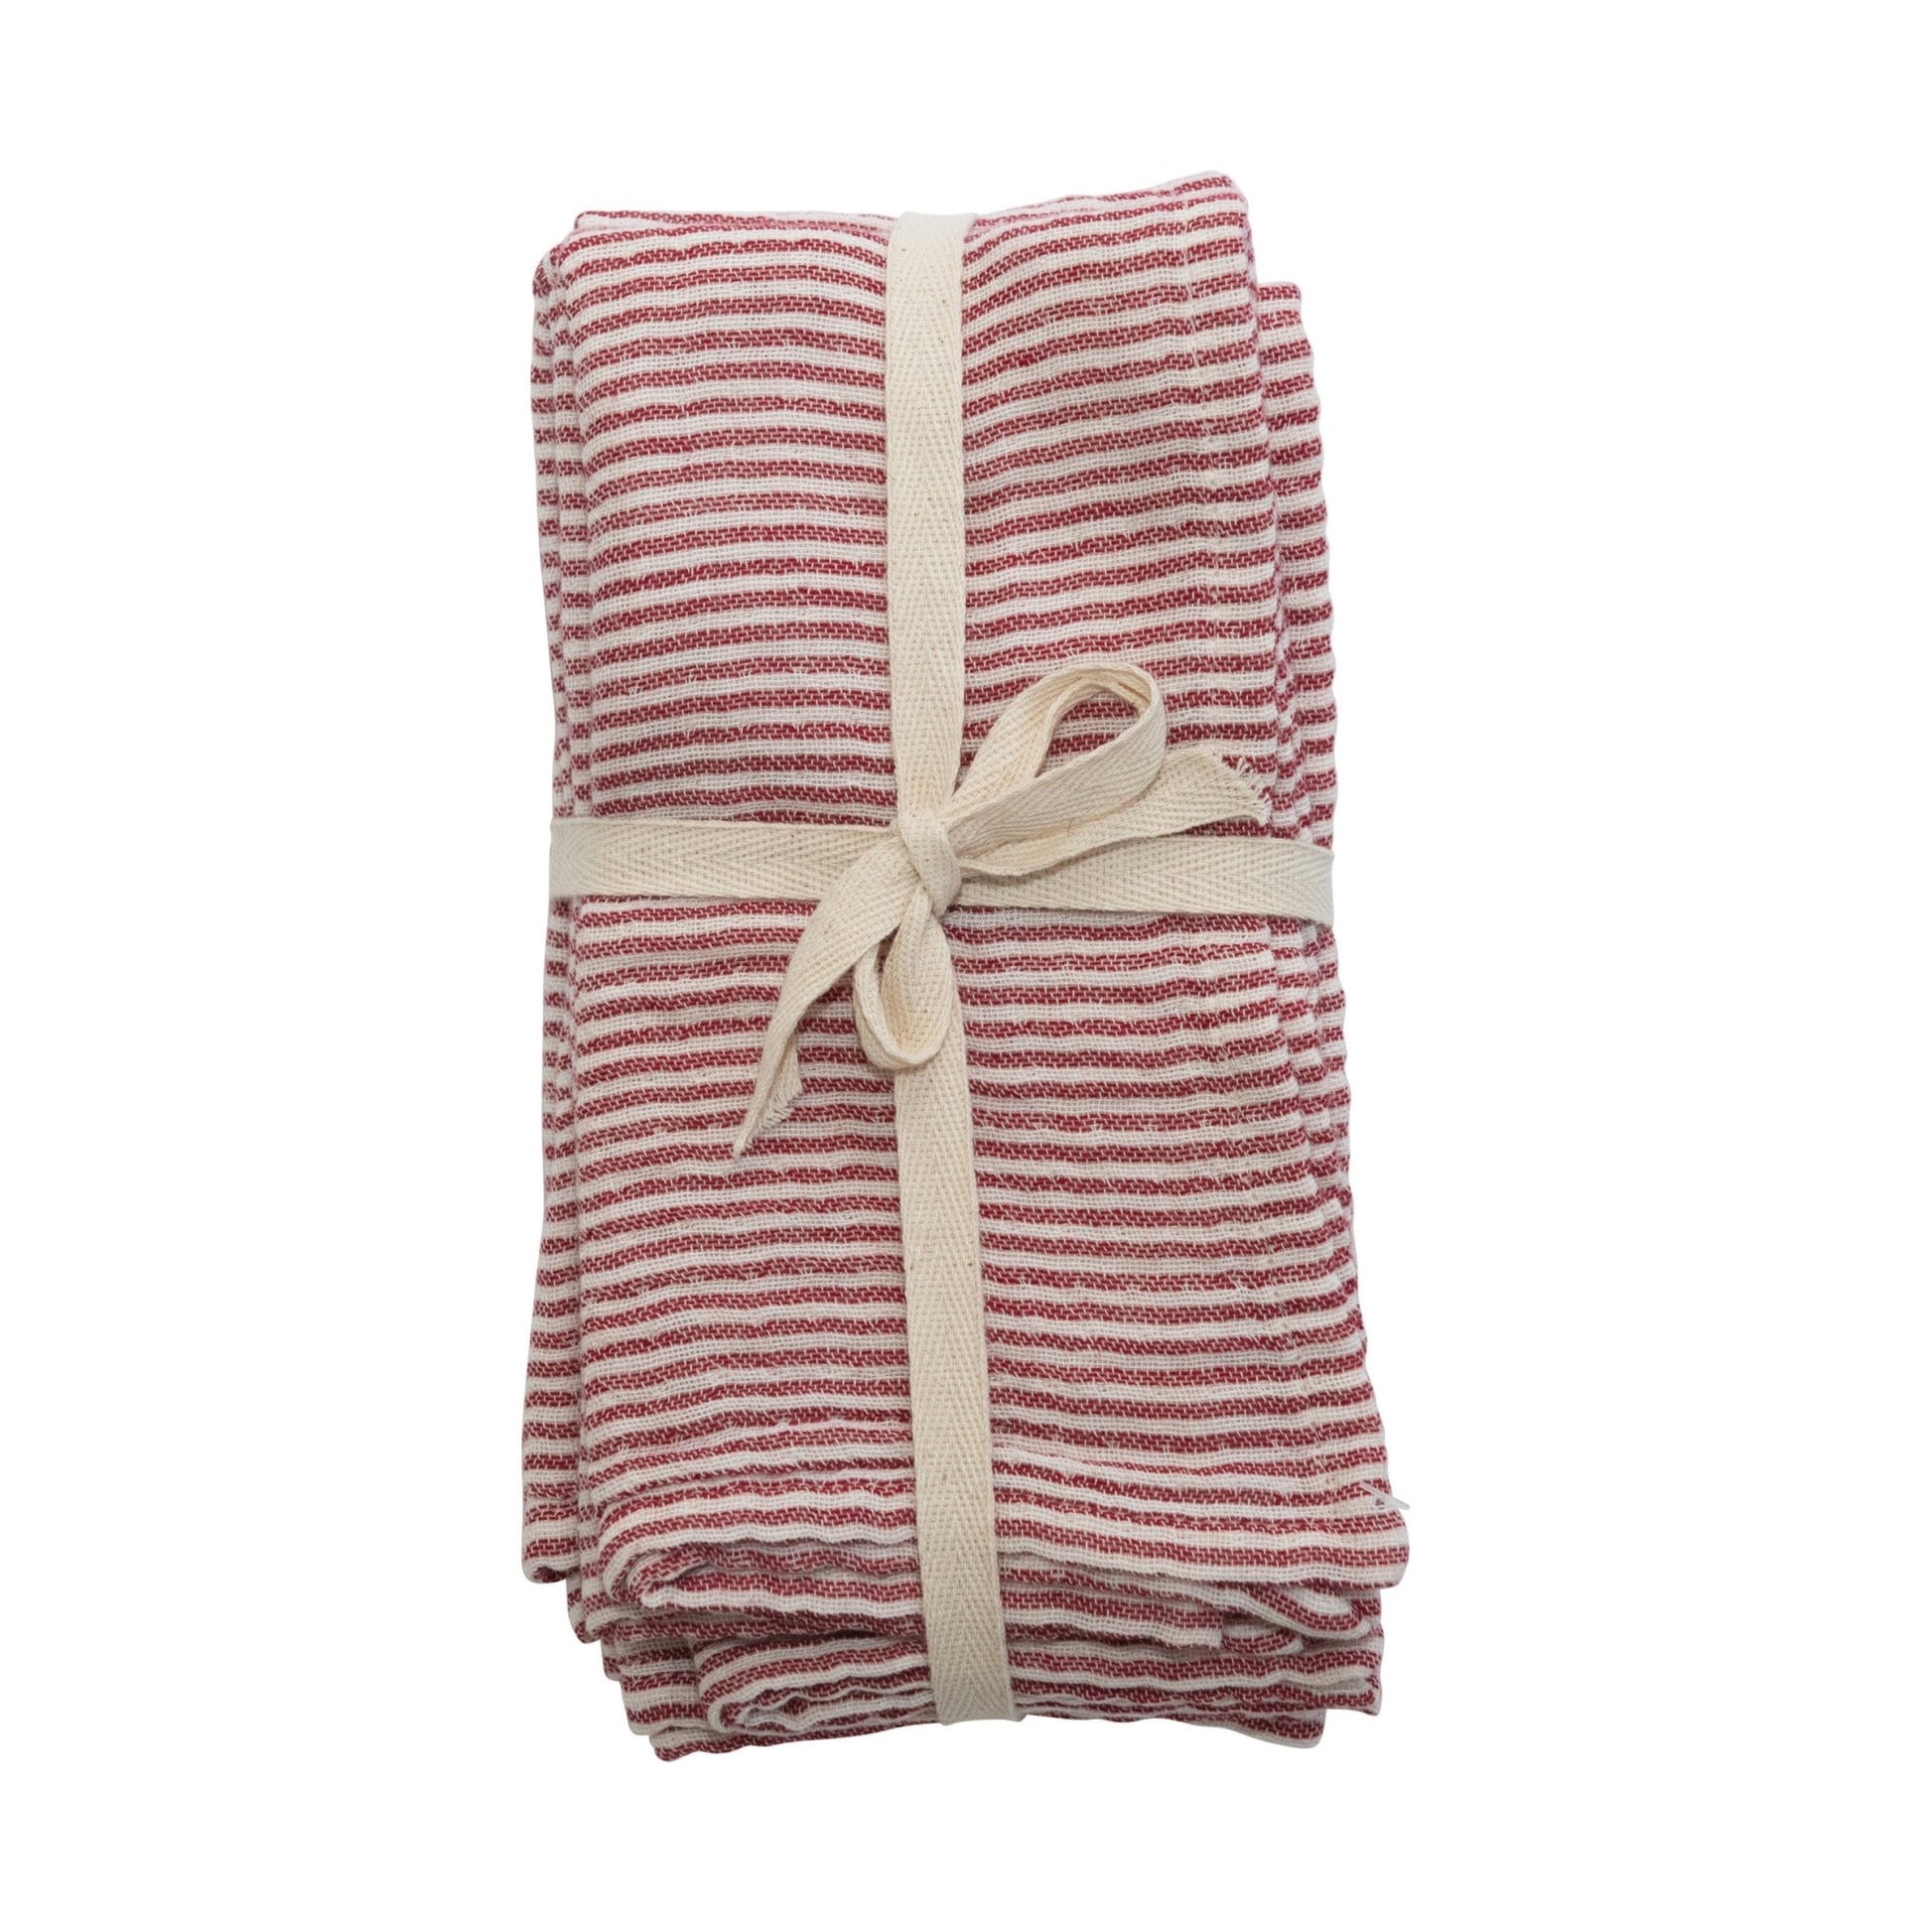 Cotton Napkins with Stripes, Set of 4 - Royalties